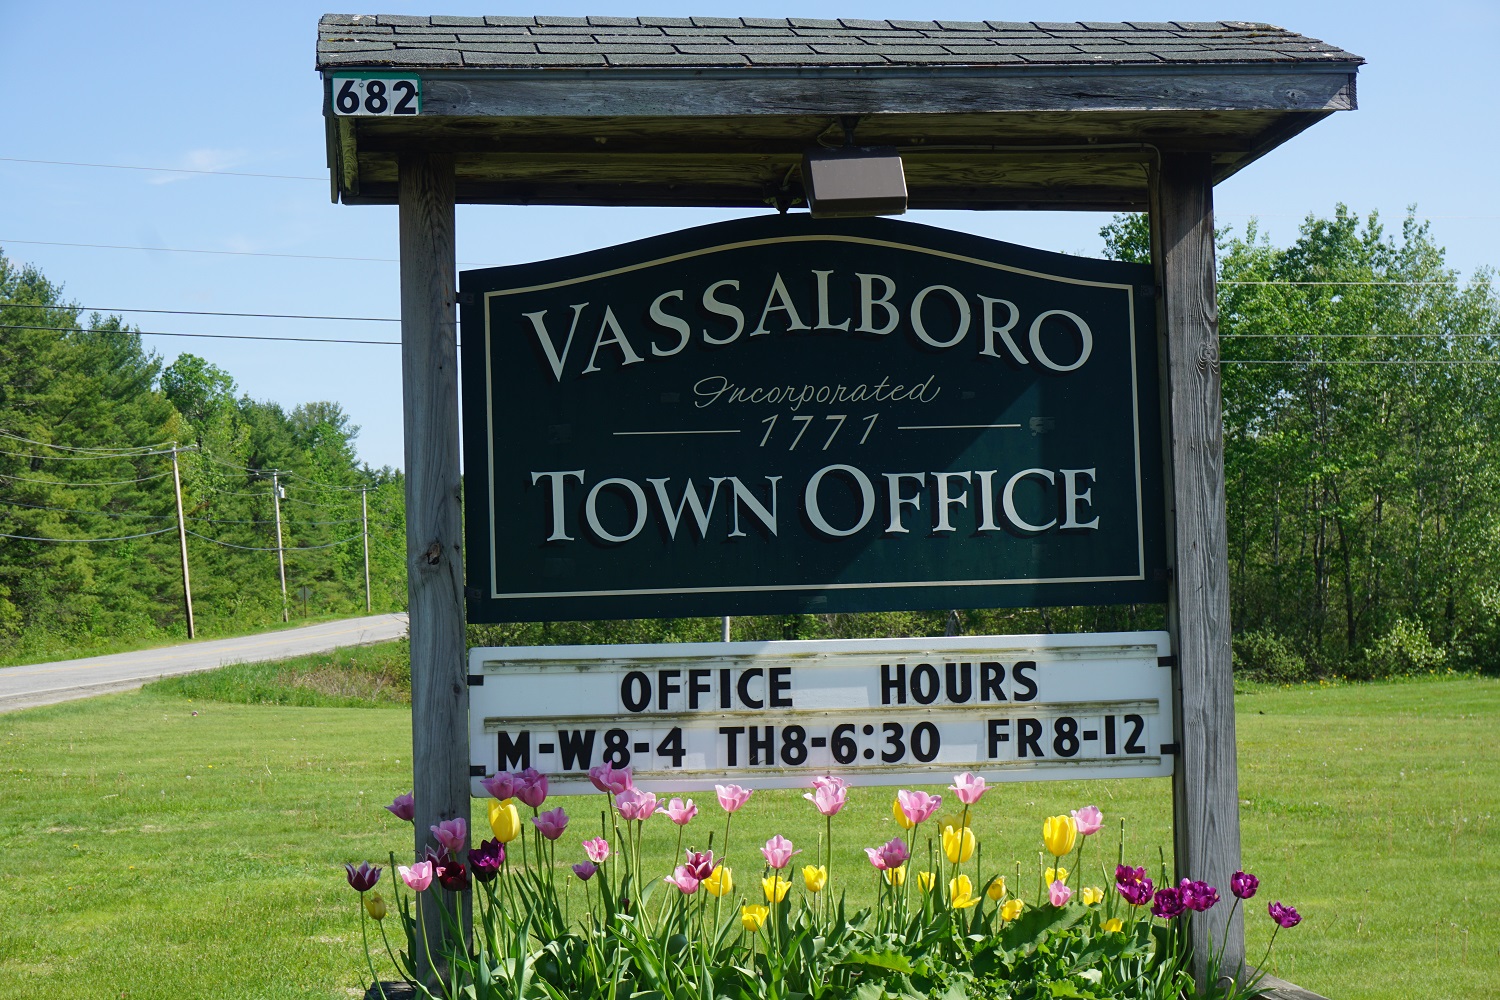 Vassalboro mass gathering ordinance, junkyard permits on selectmen’s agenda